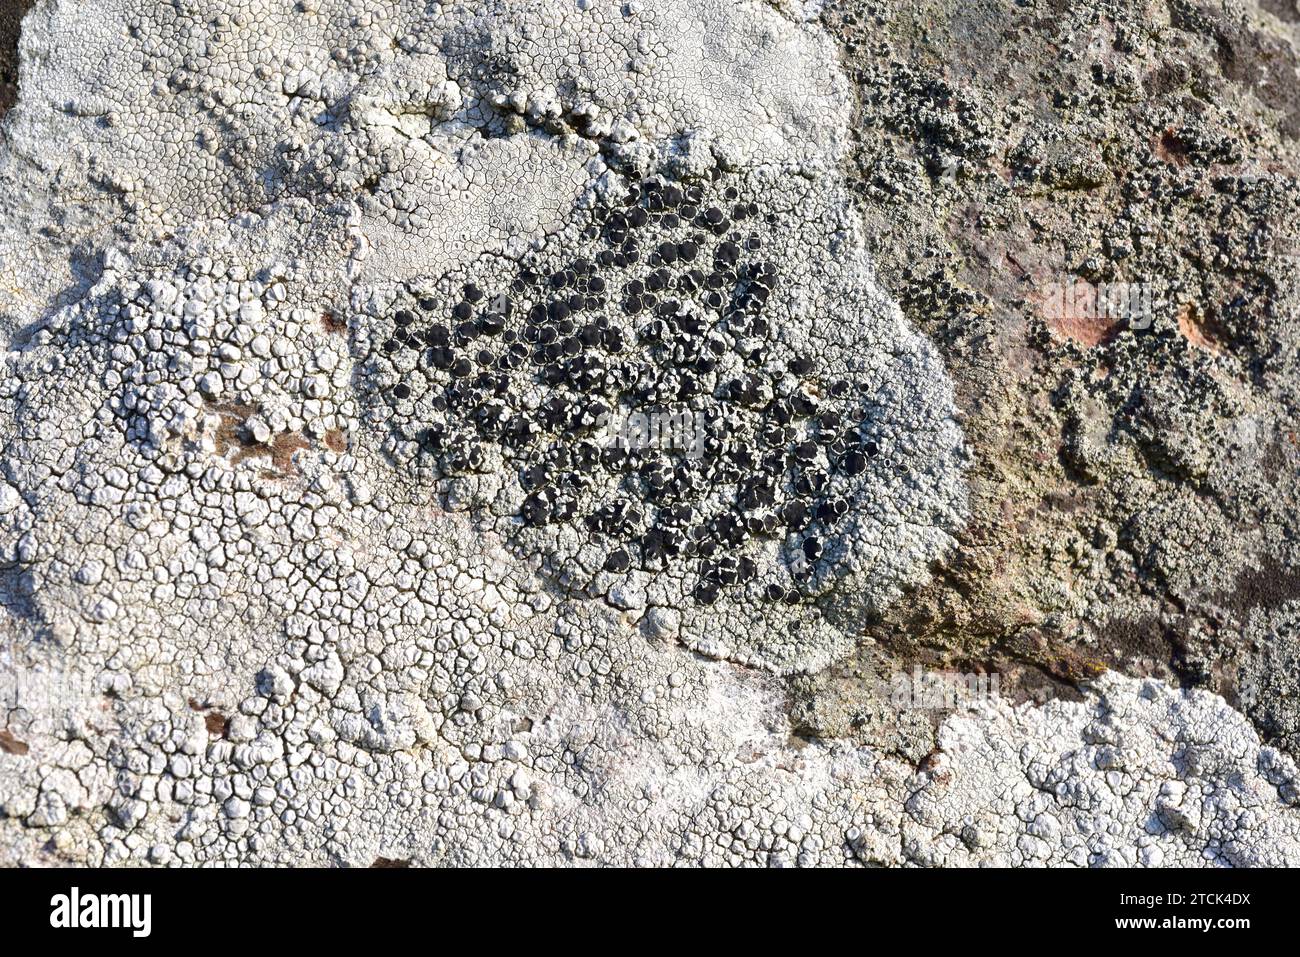 Tephromela atra or Lecanora atra is a crustose lichen with black apothecia. This photo was taken in La Albera, Girona province, Catalonia, Spain. Stock Photo